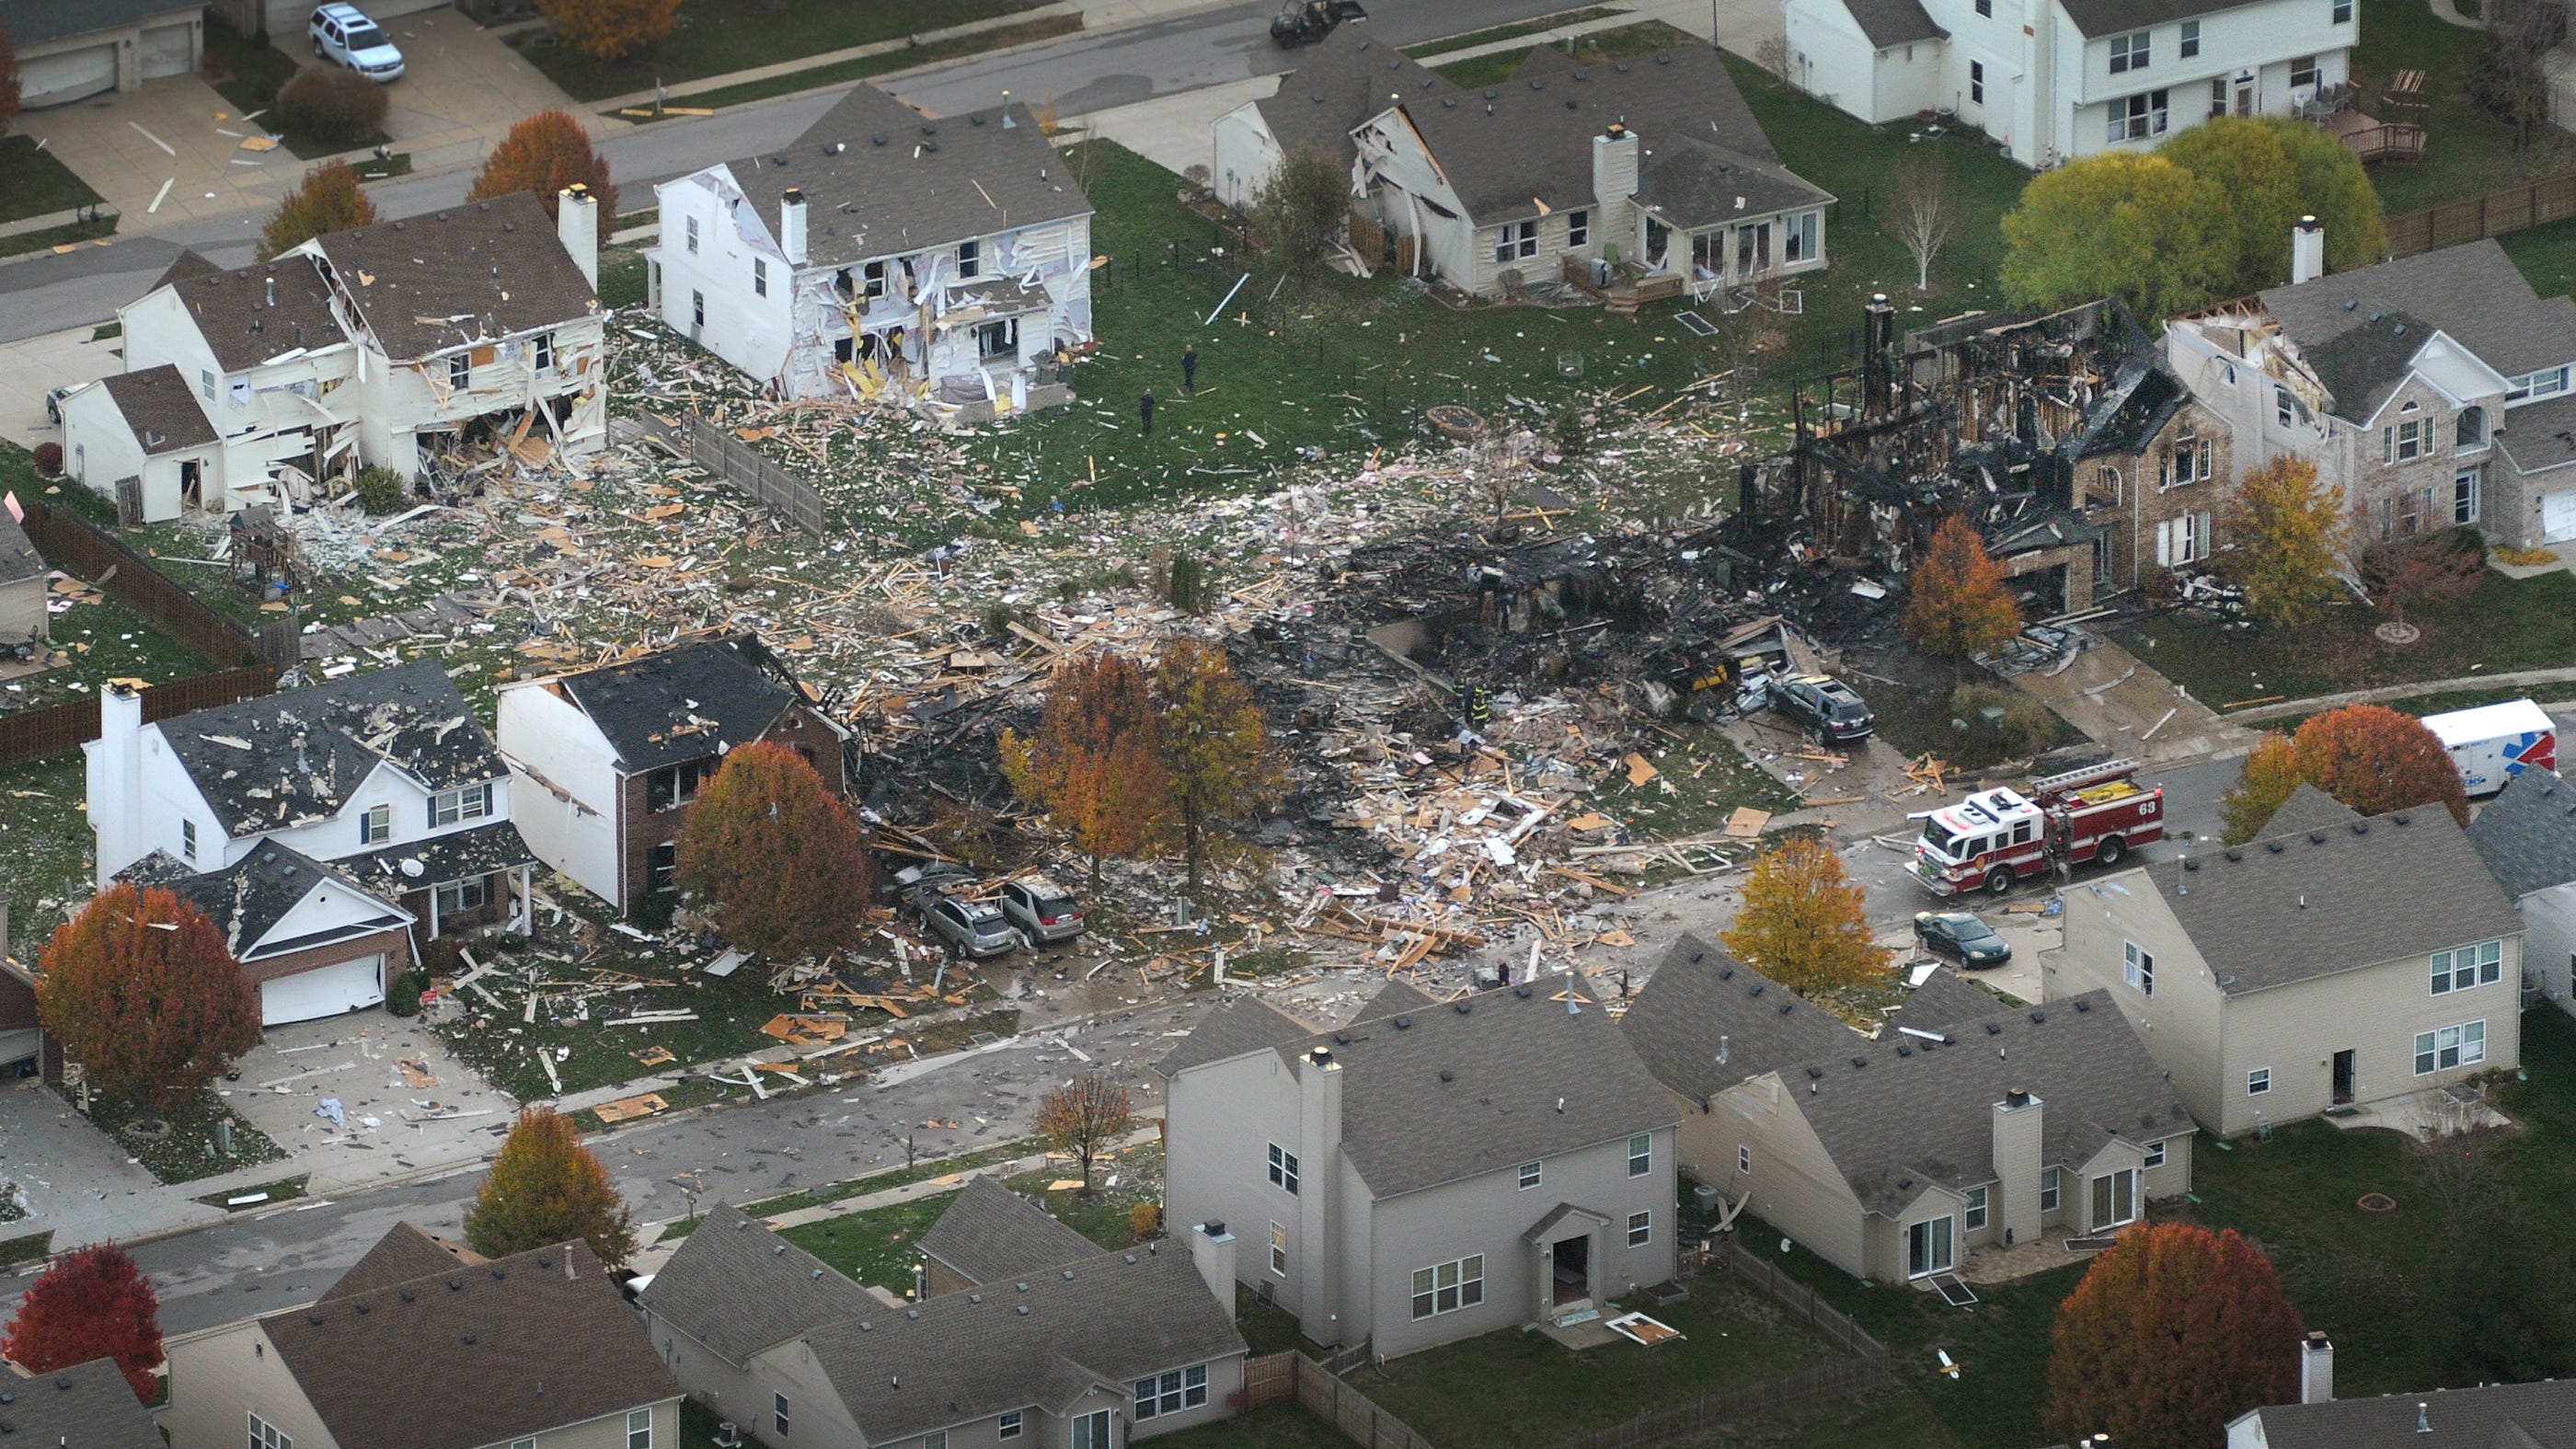 Richmond Hill Indianapolis explosion survivors recall deadly tragedy